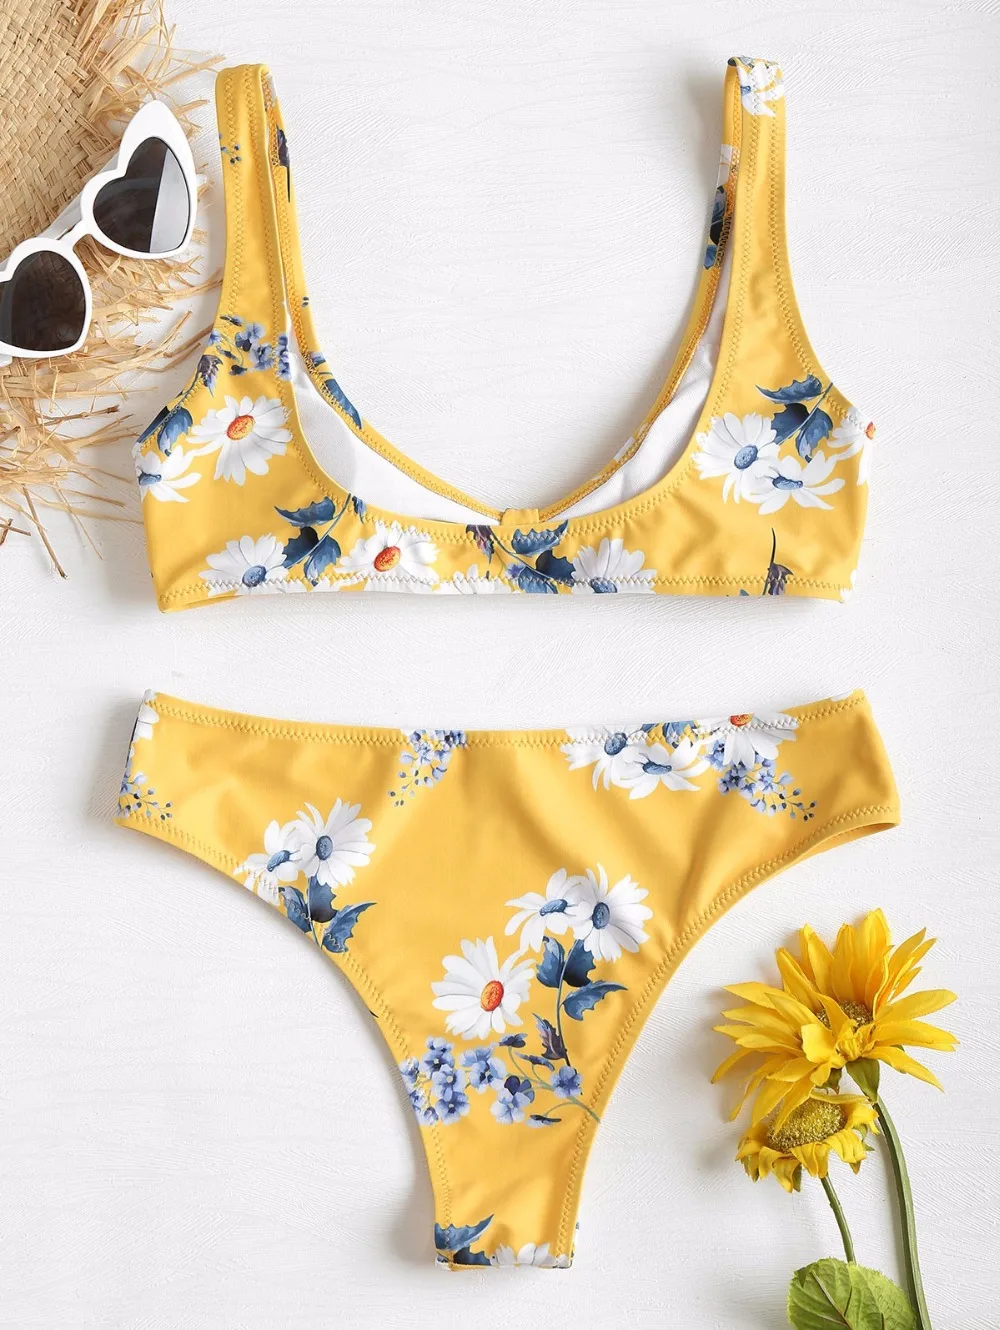 Knot Daisy Print Cupshe Little Daisy Bikini Set Women Summer Swimsuit ...